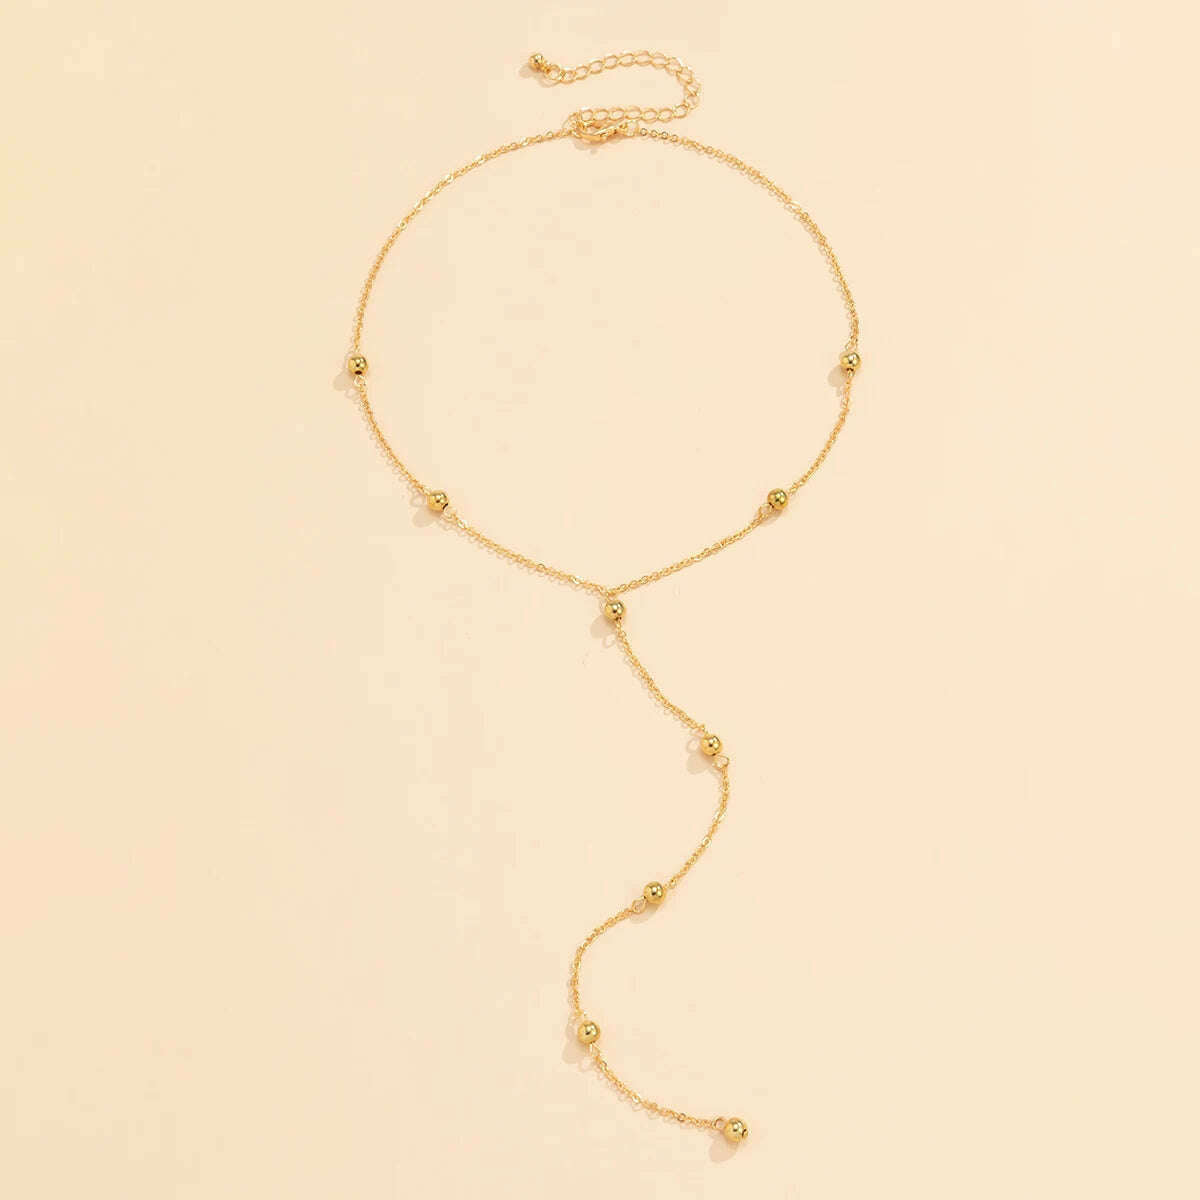 KIMLUD, Ingemark Minimalism 2022 Long Tassel Necklace for Women Girls Vintage Chest Thin Chain Ball Pendant Female Neck Jewelry Gift New, KIMLUD Women's Clothes